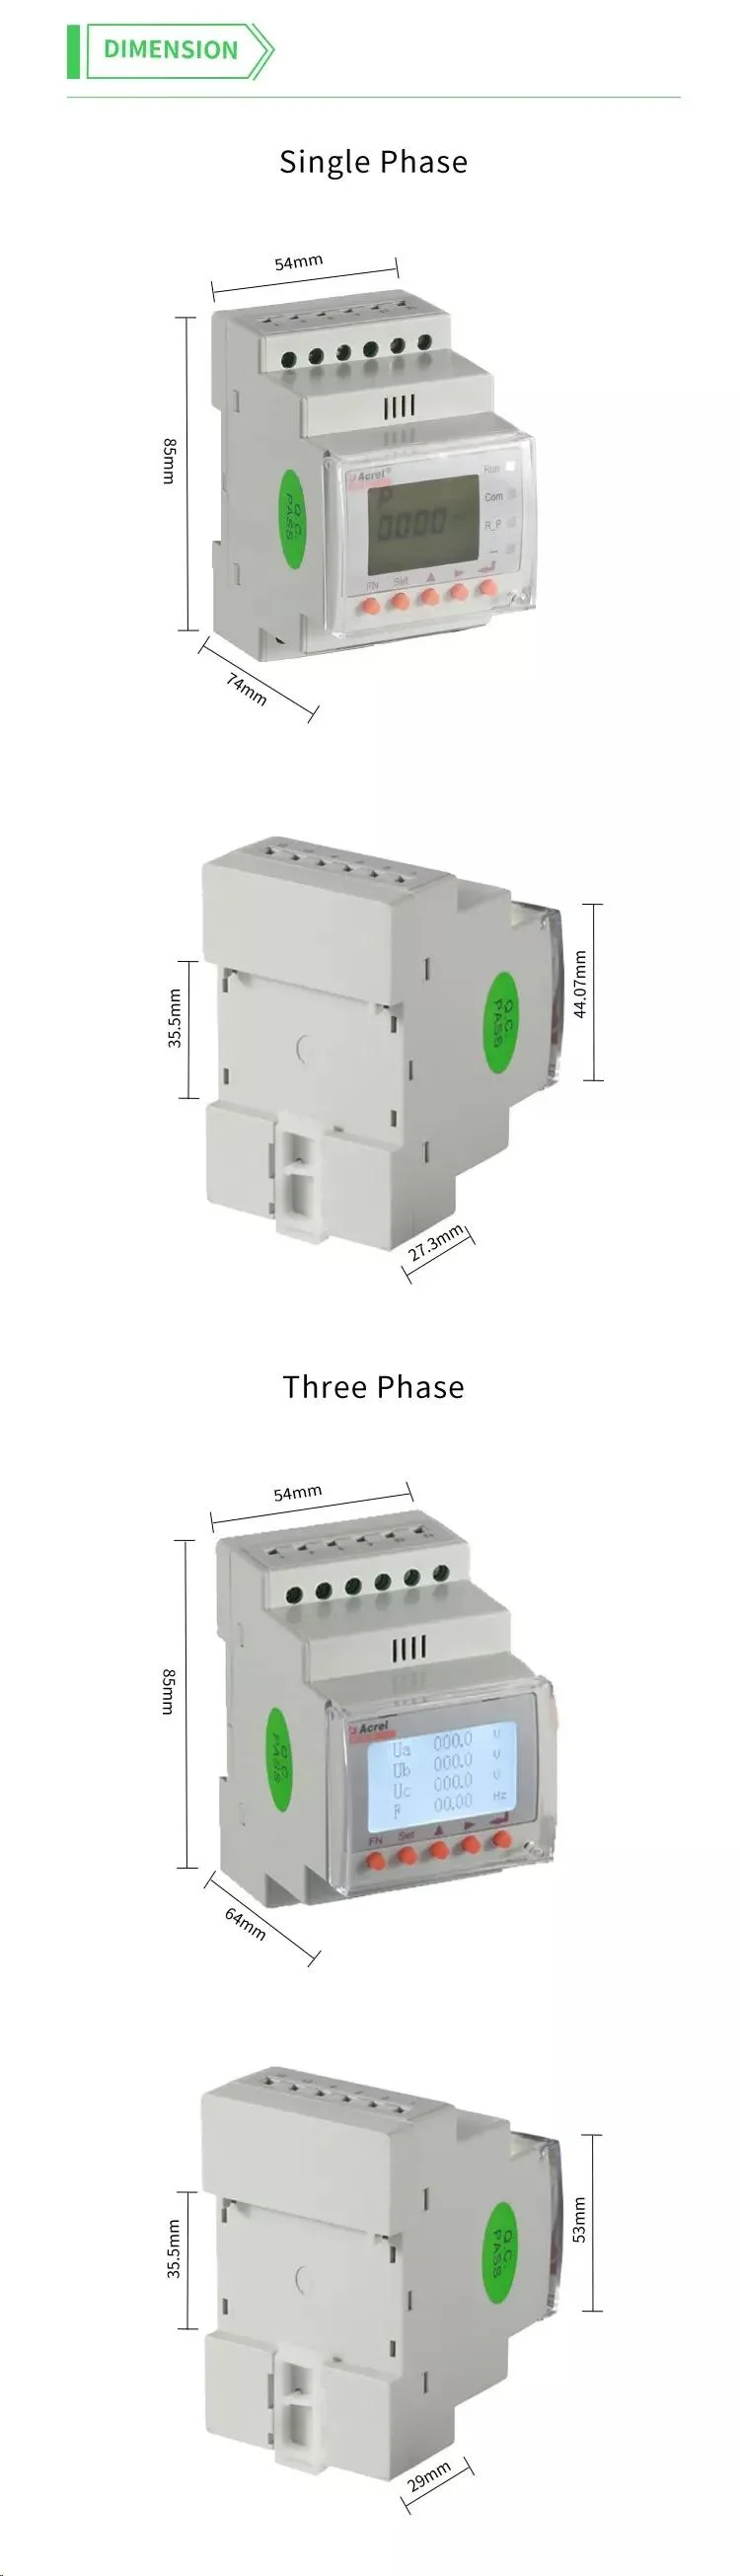 ACR10rh-Dxxte Single Phase Harmonic Guide Rail Installation PV/Solar Inverter Energy Meter